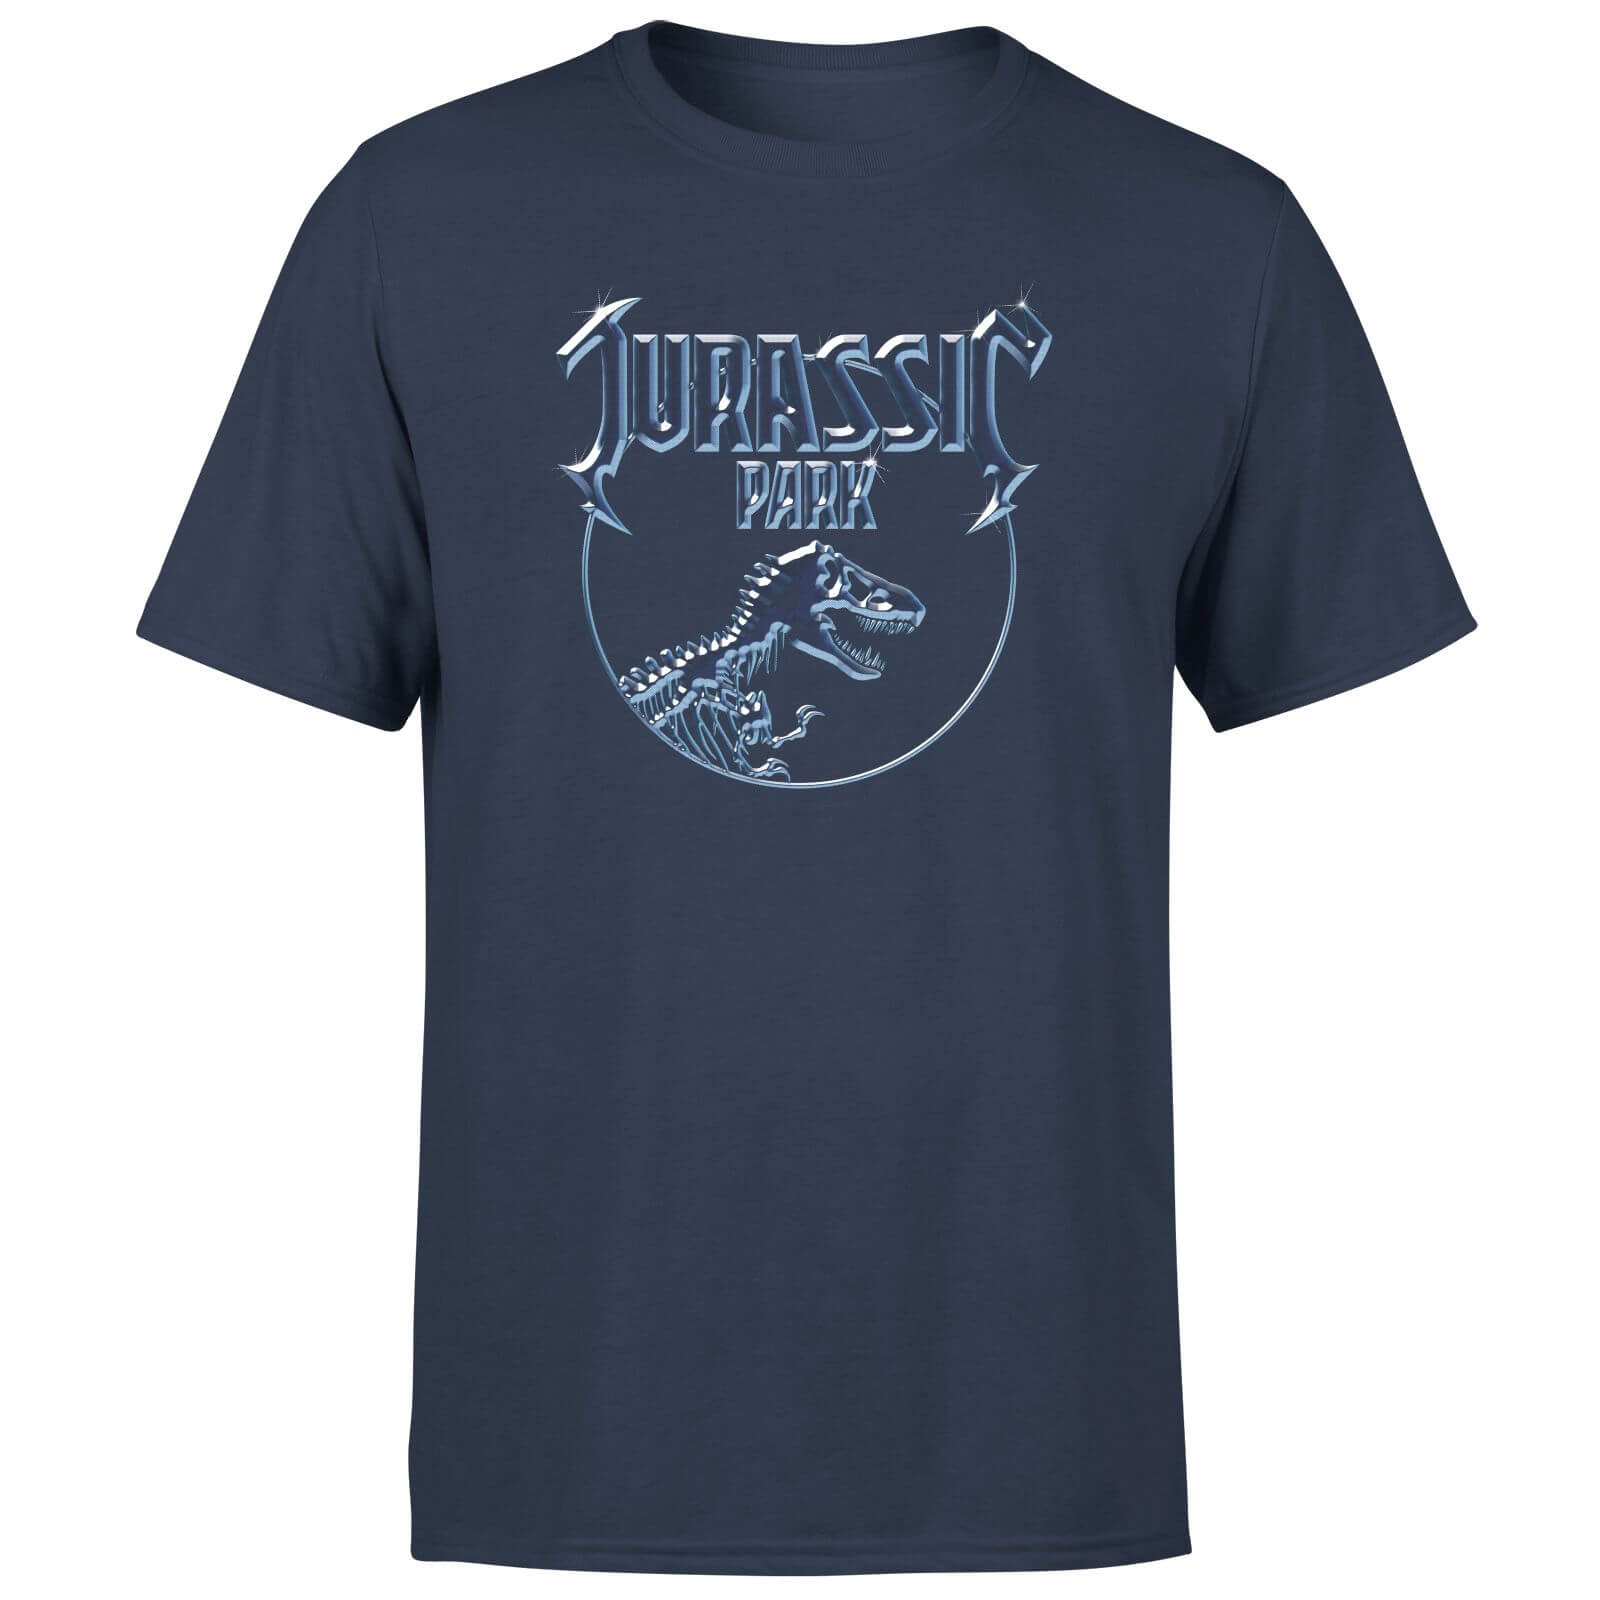  jurassic park logo metal mens t-shirt